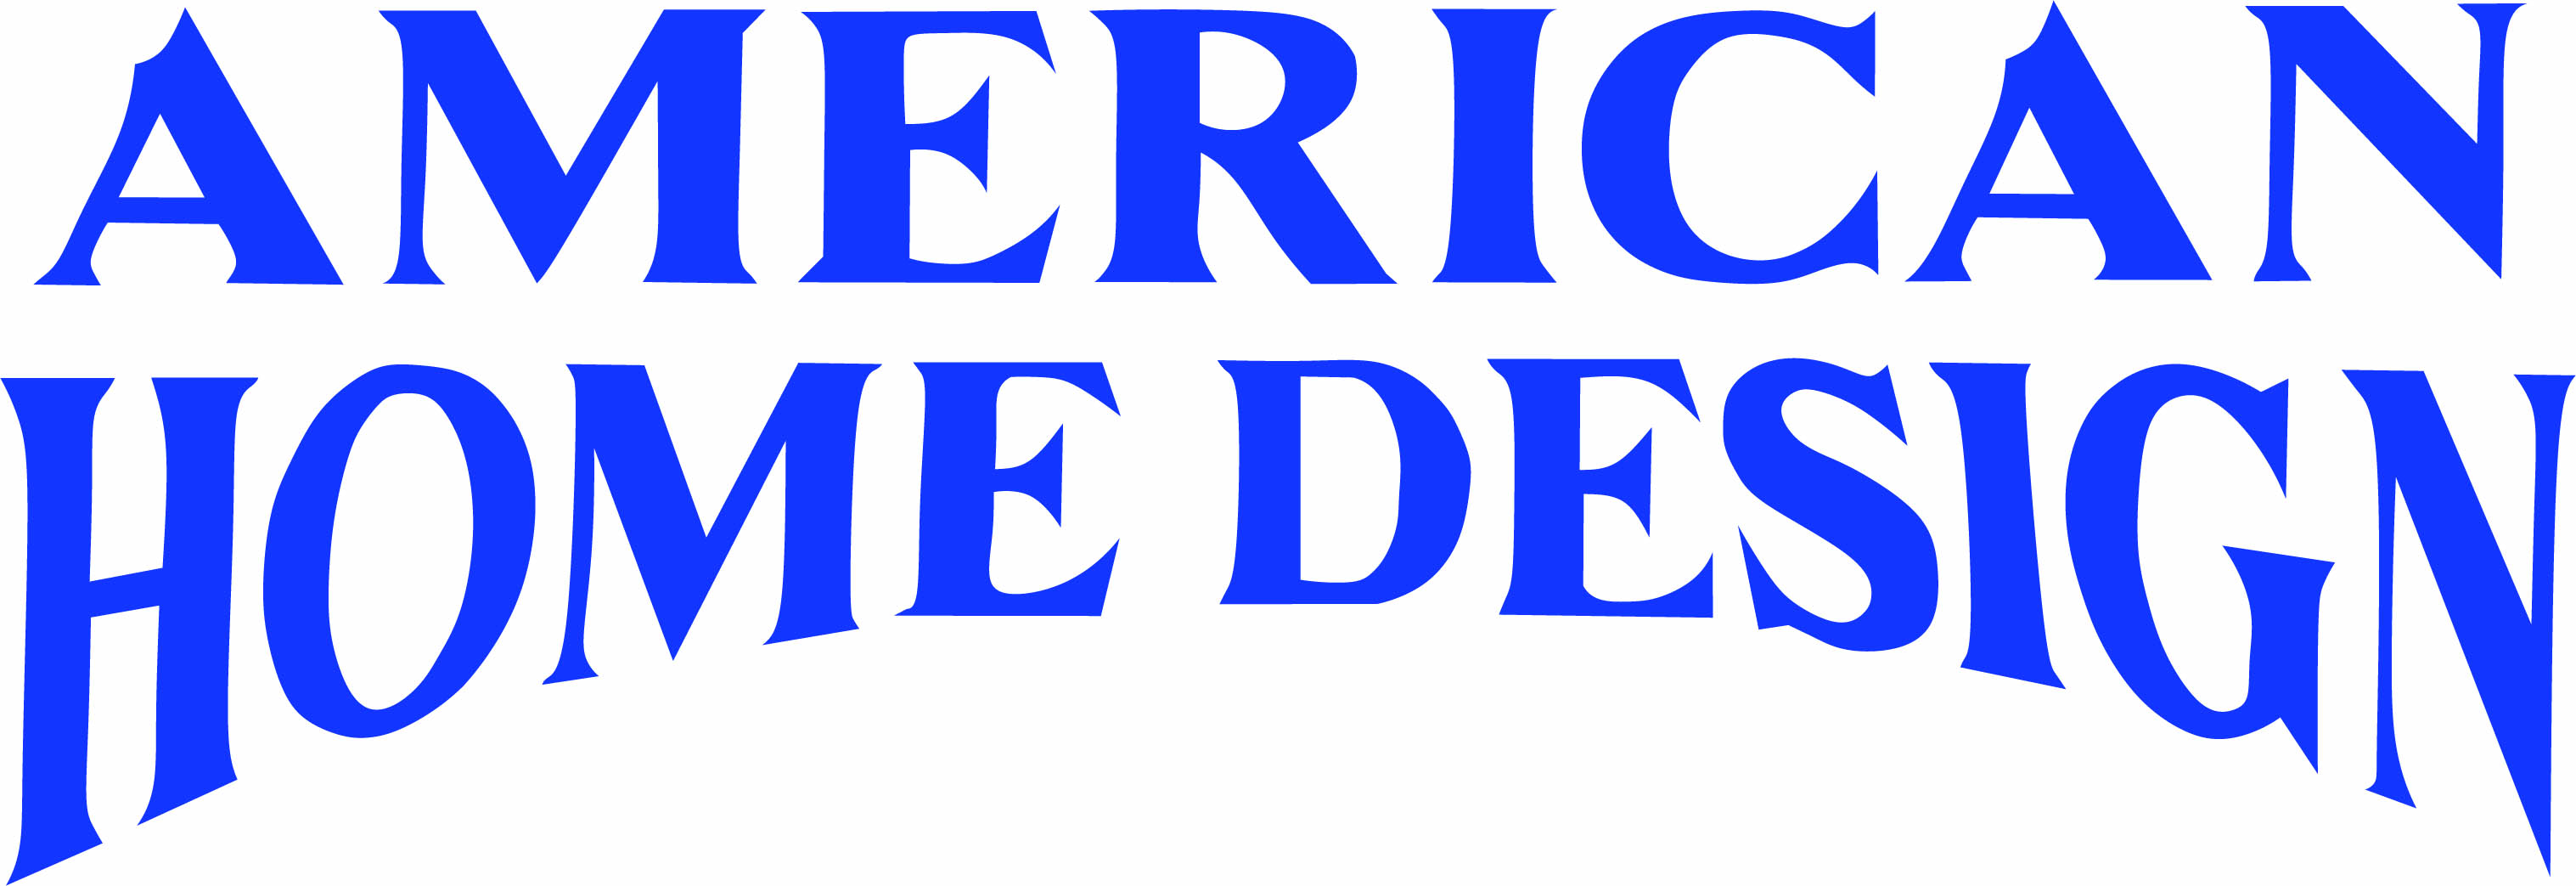 American Home Design, Inc. Logo